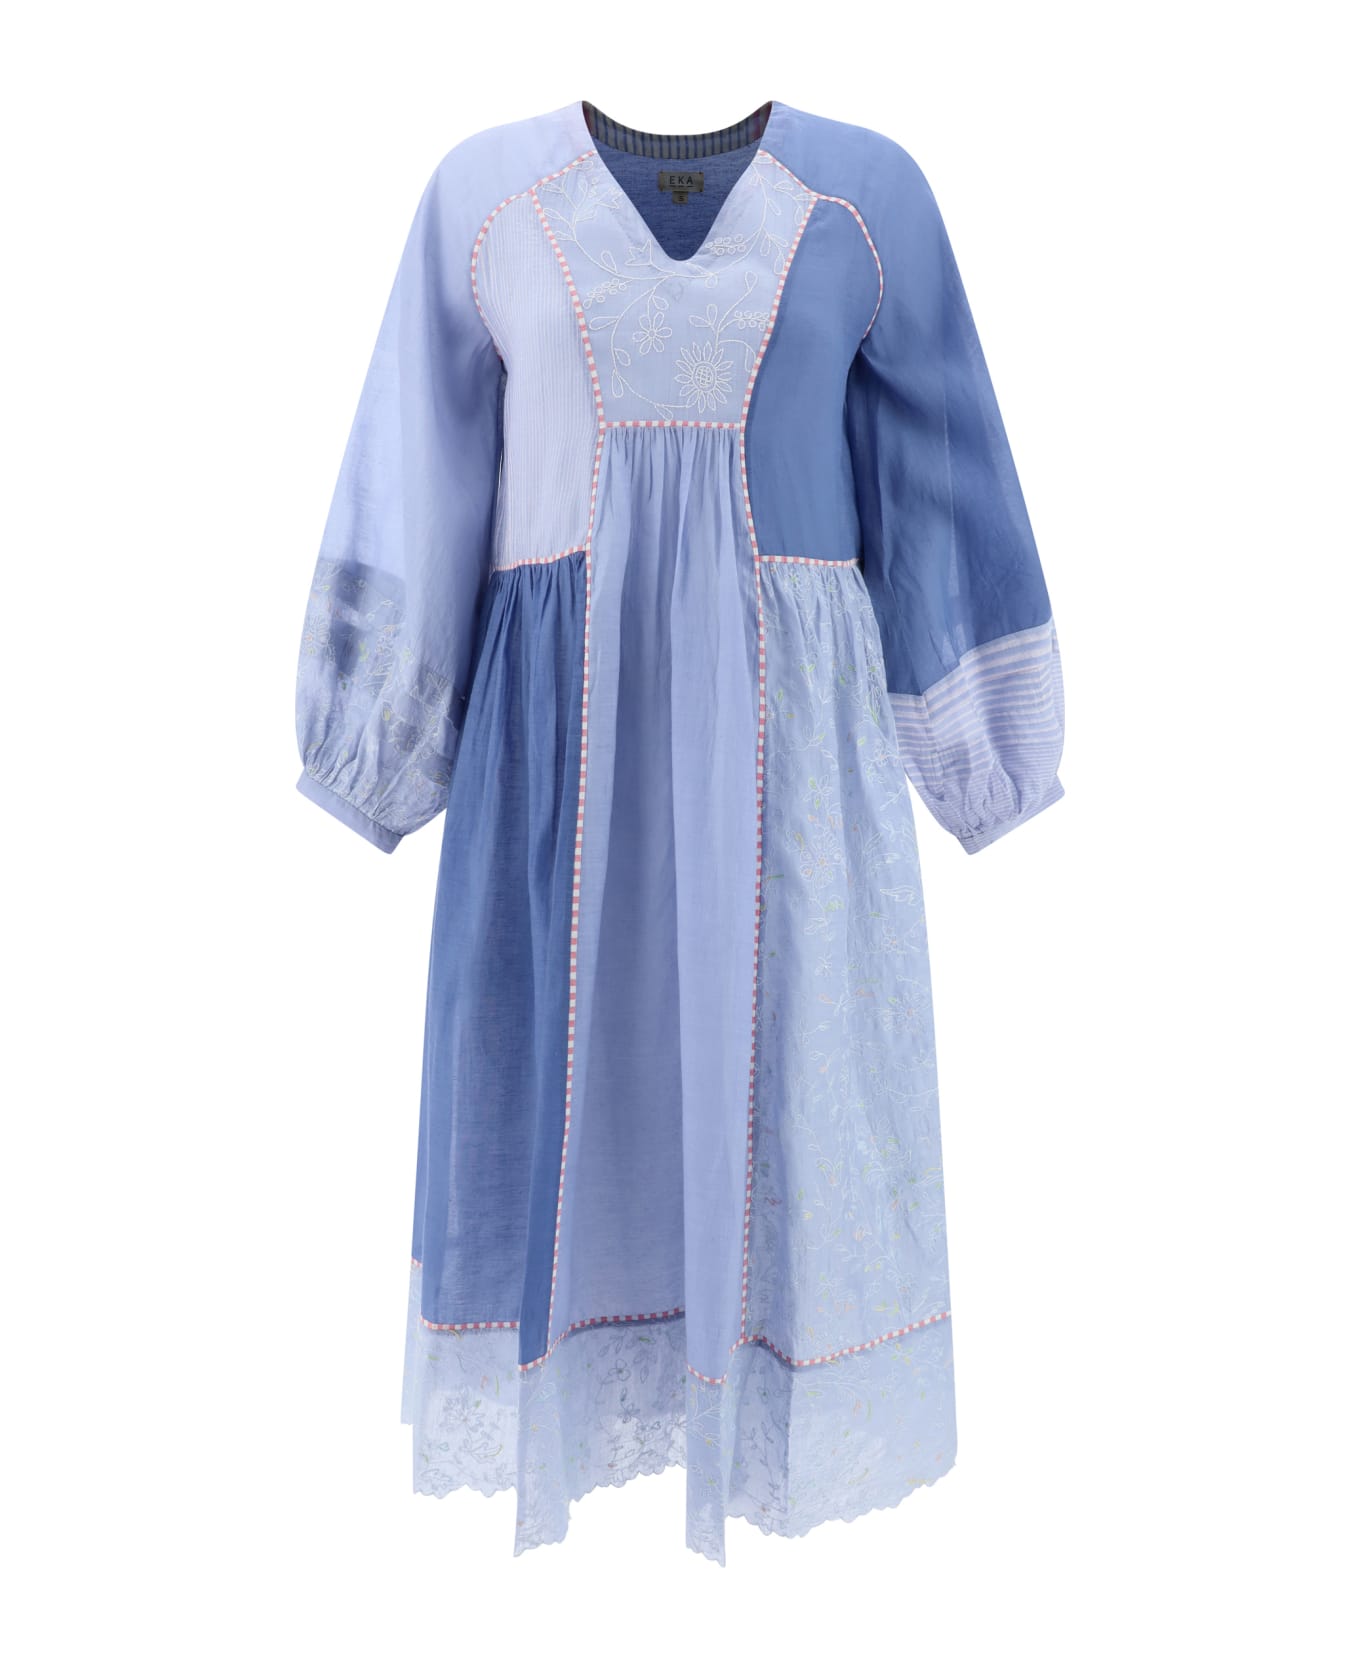 Eka Veria Long Dress - Powder Blue